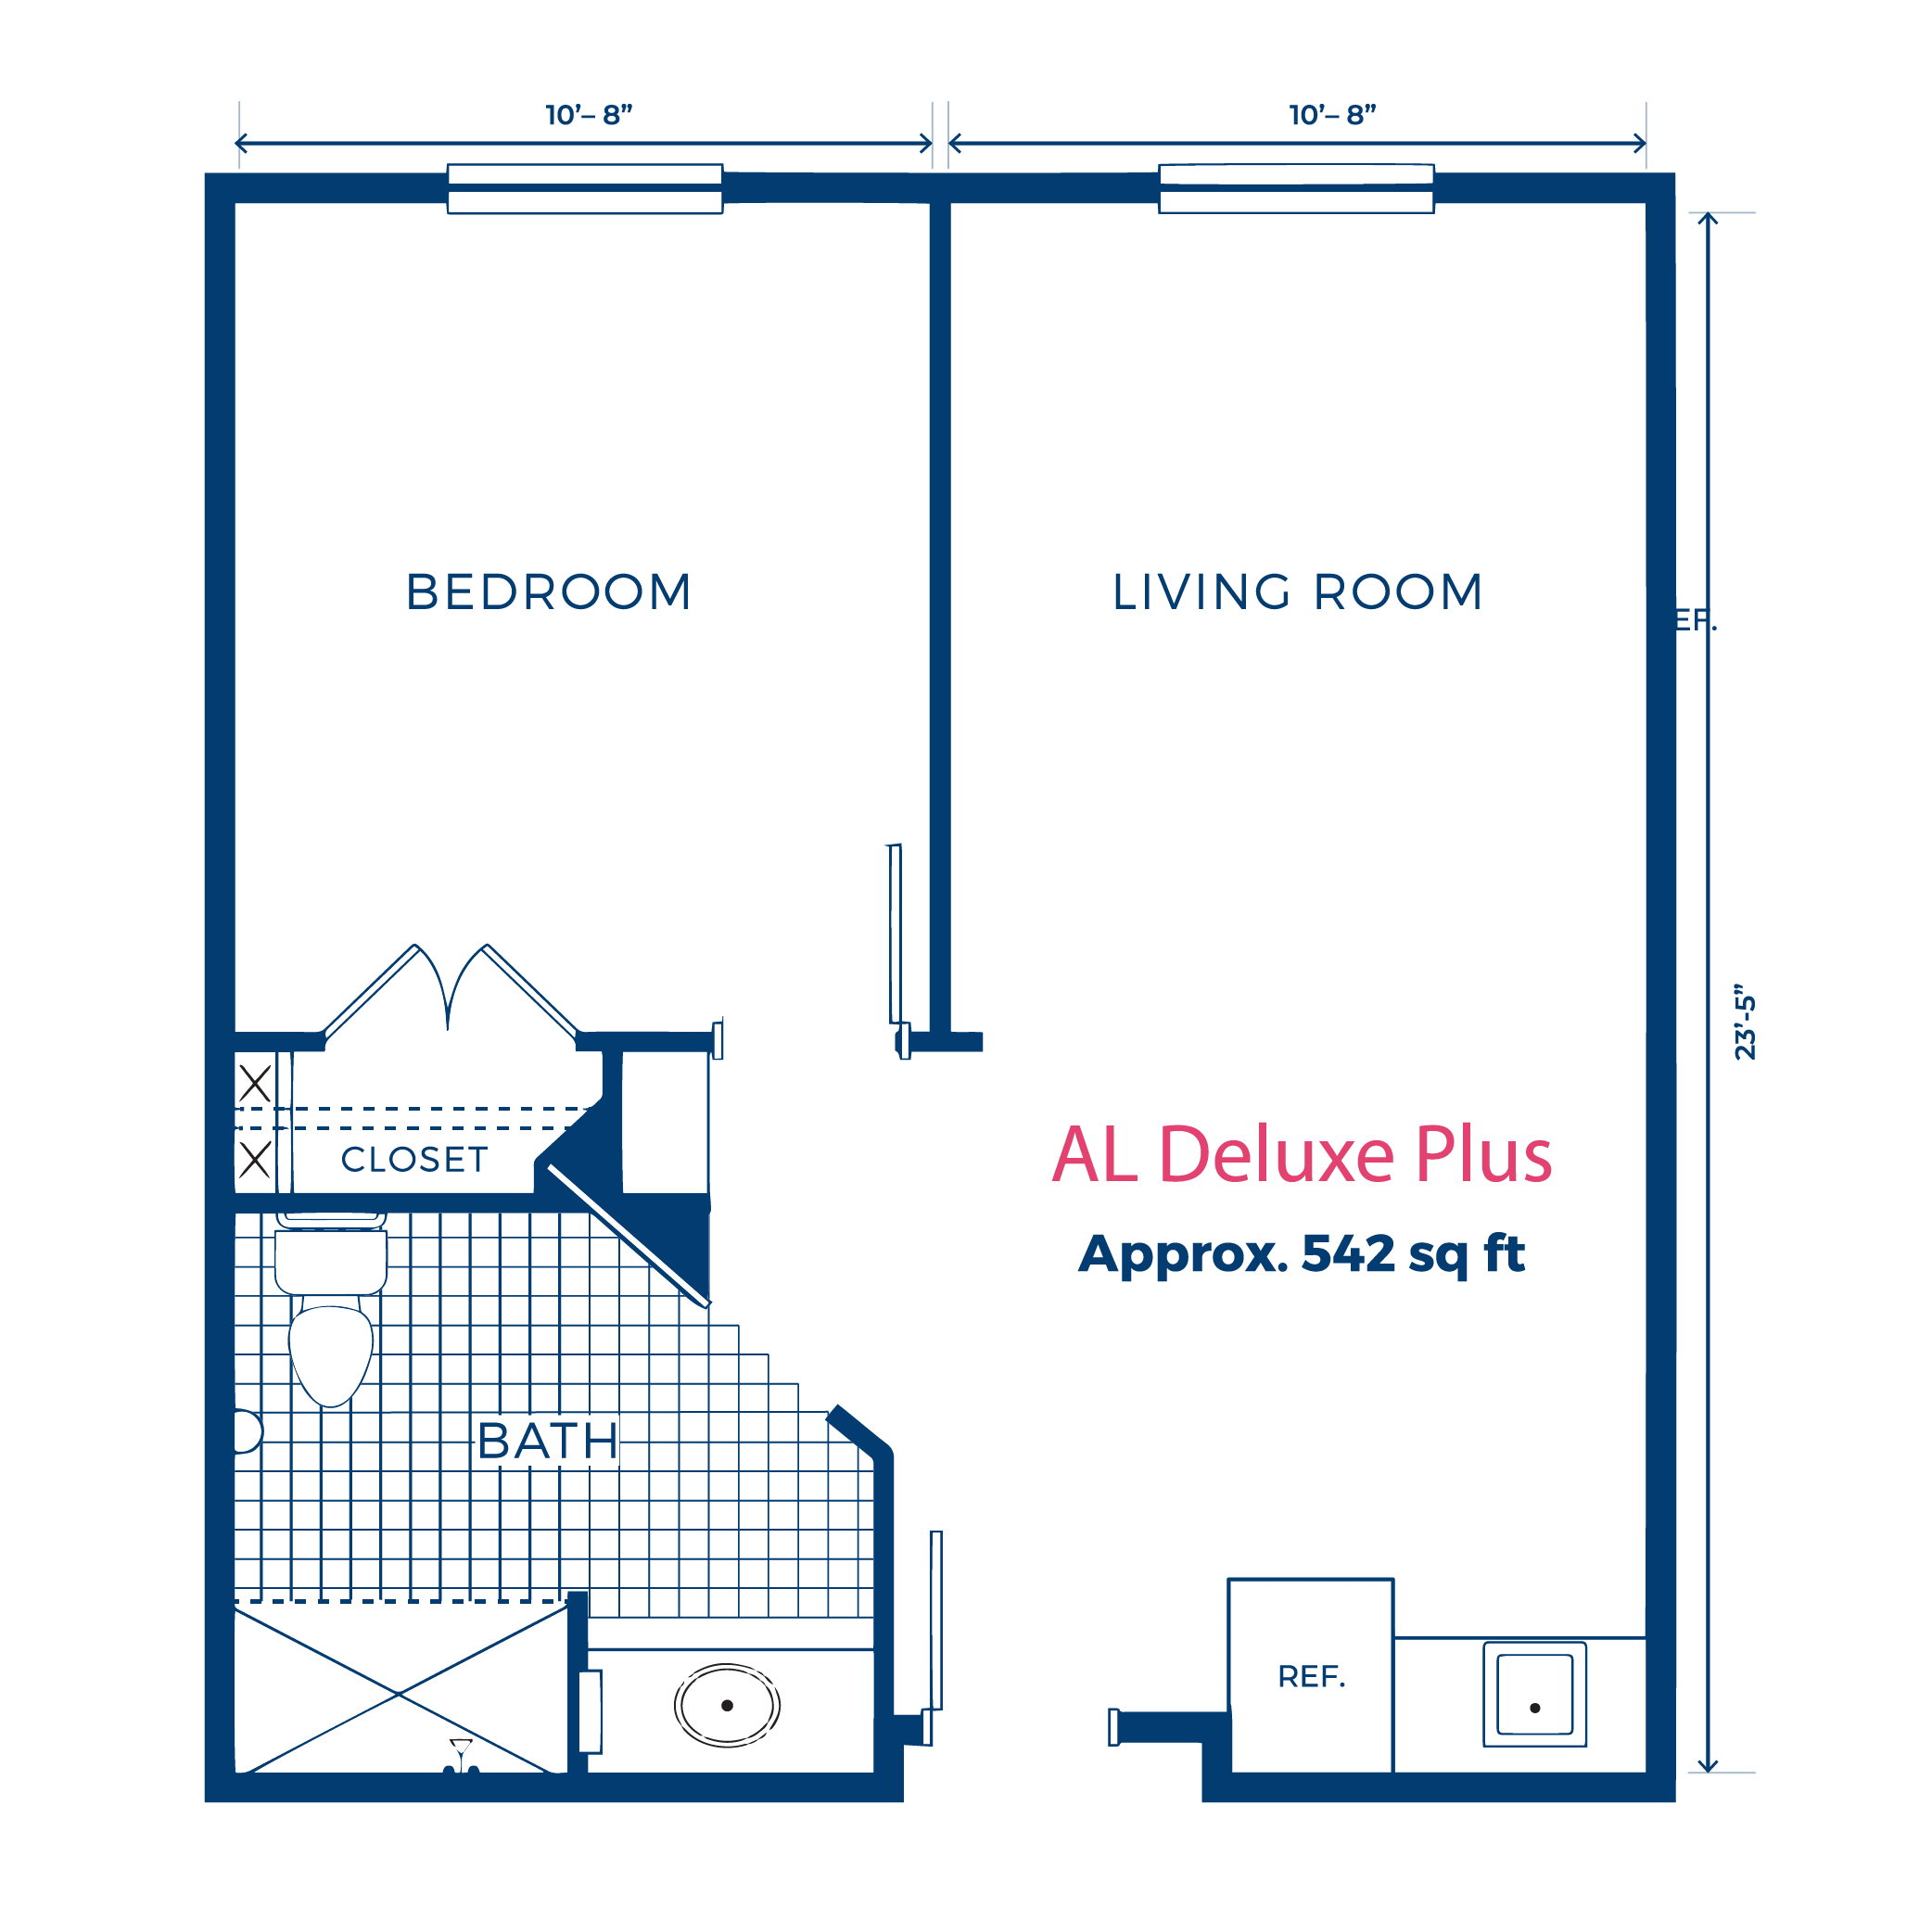 Georgian Lakeside Floorplans - AL Deluxe Plus 542 Sq Ft